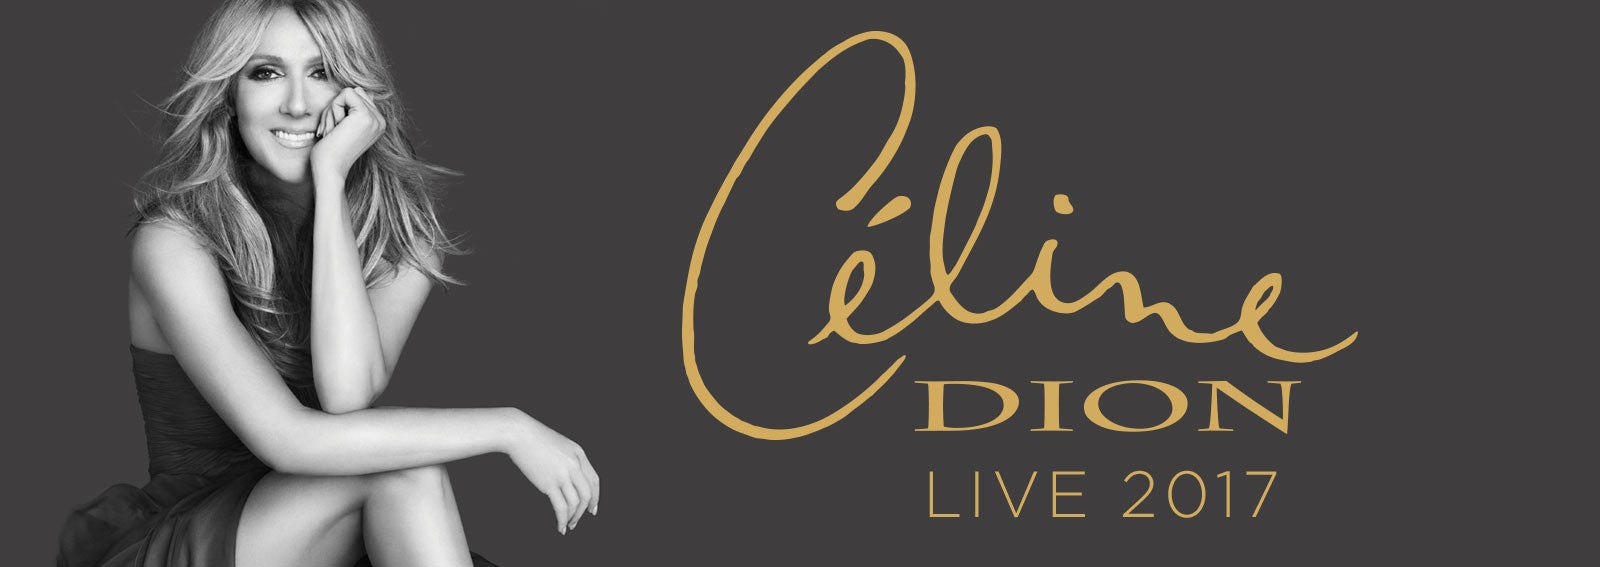 Celine Dion | Artists | Glasgow | SEC